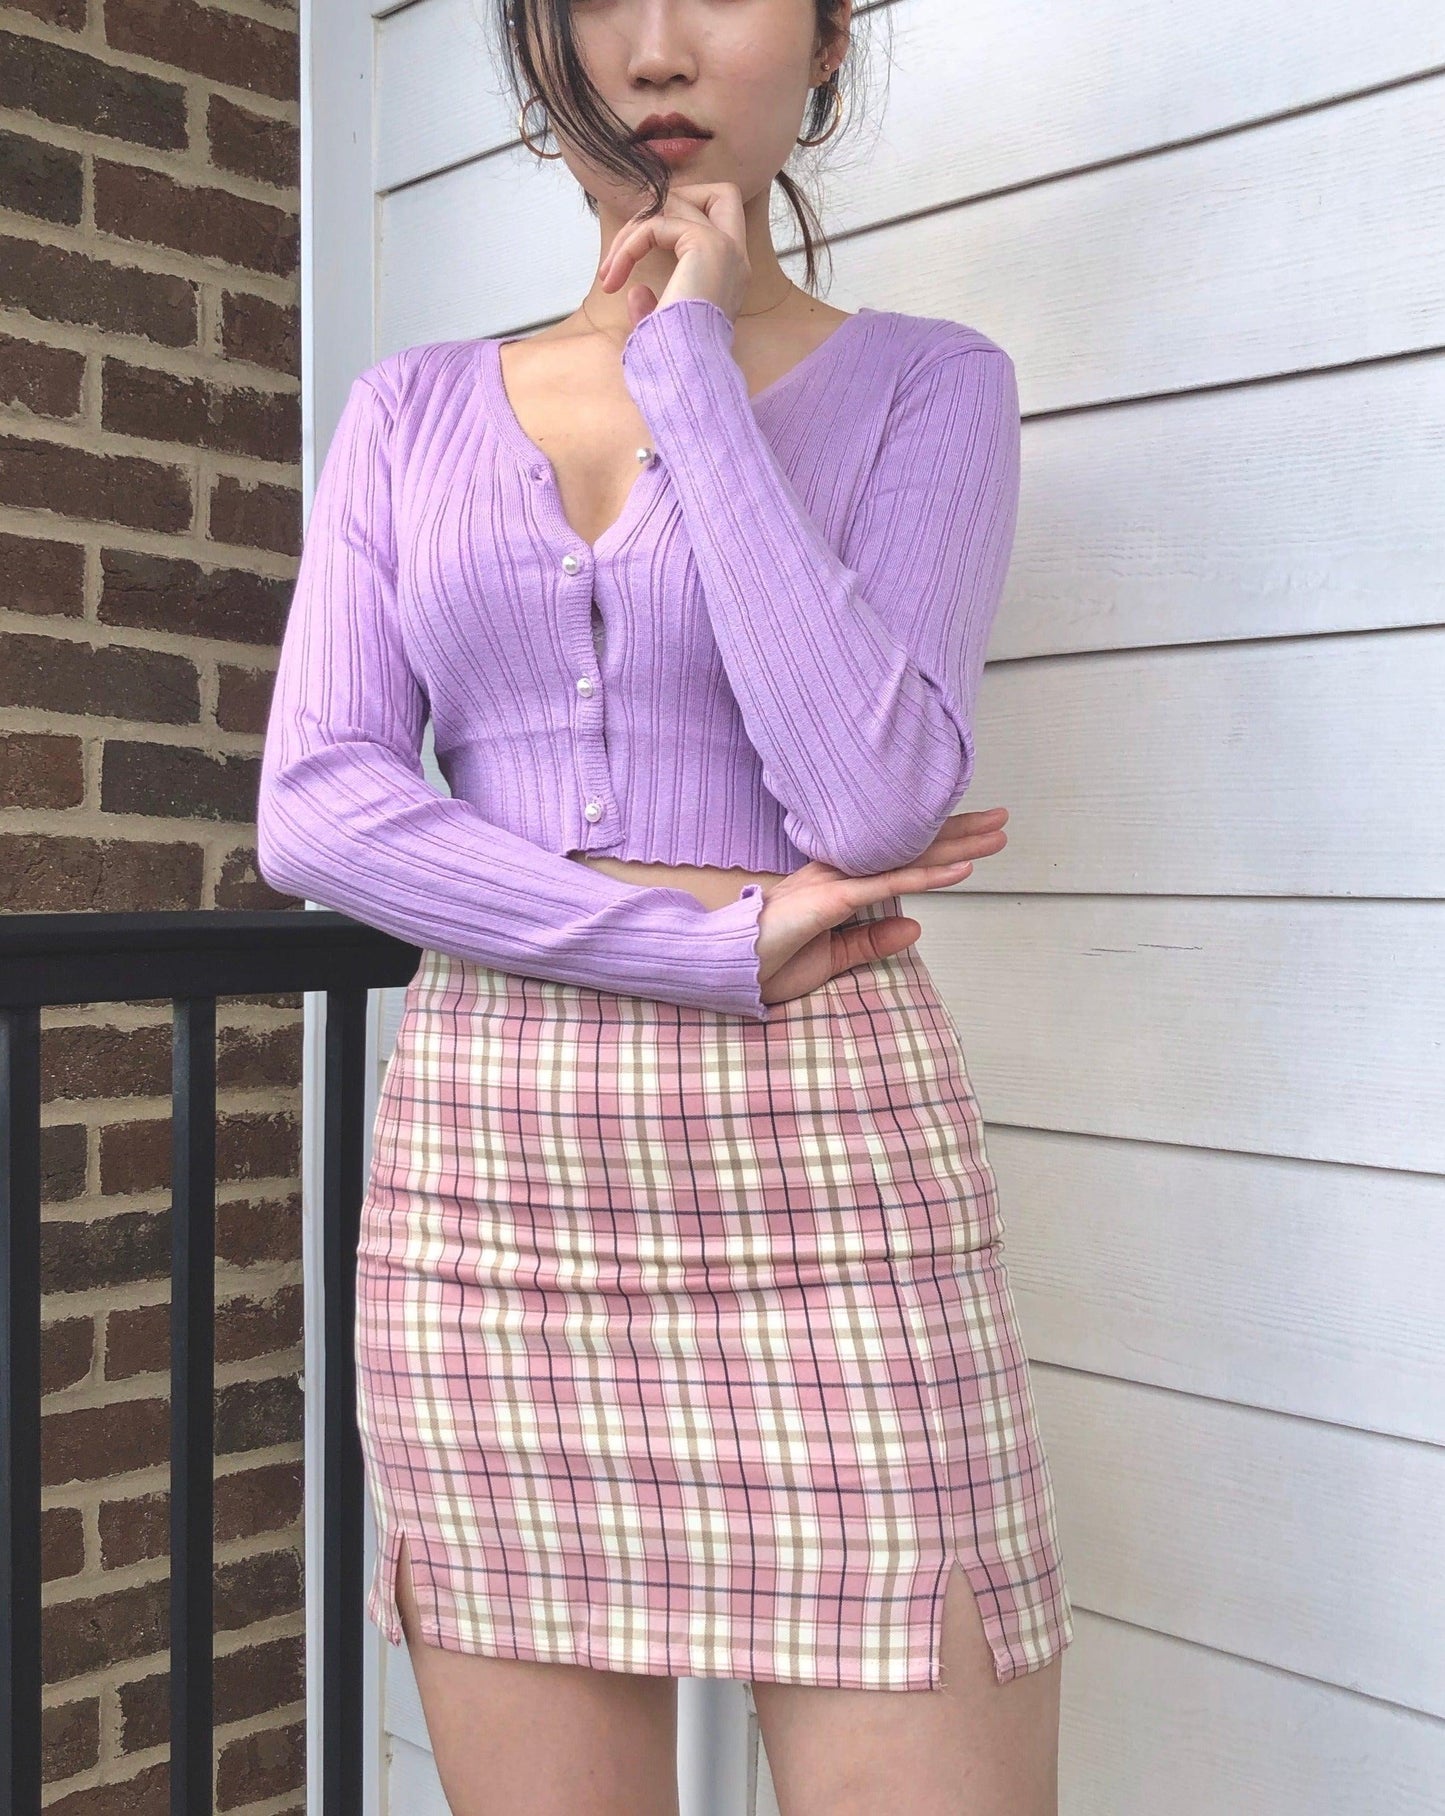 purple cropped cardigan top